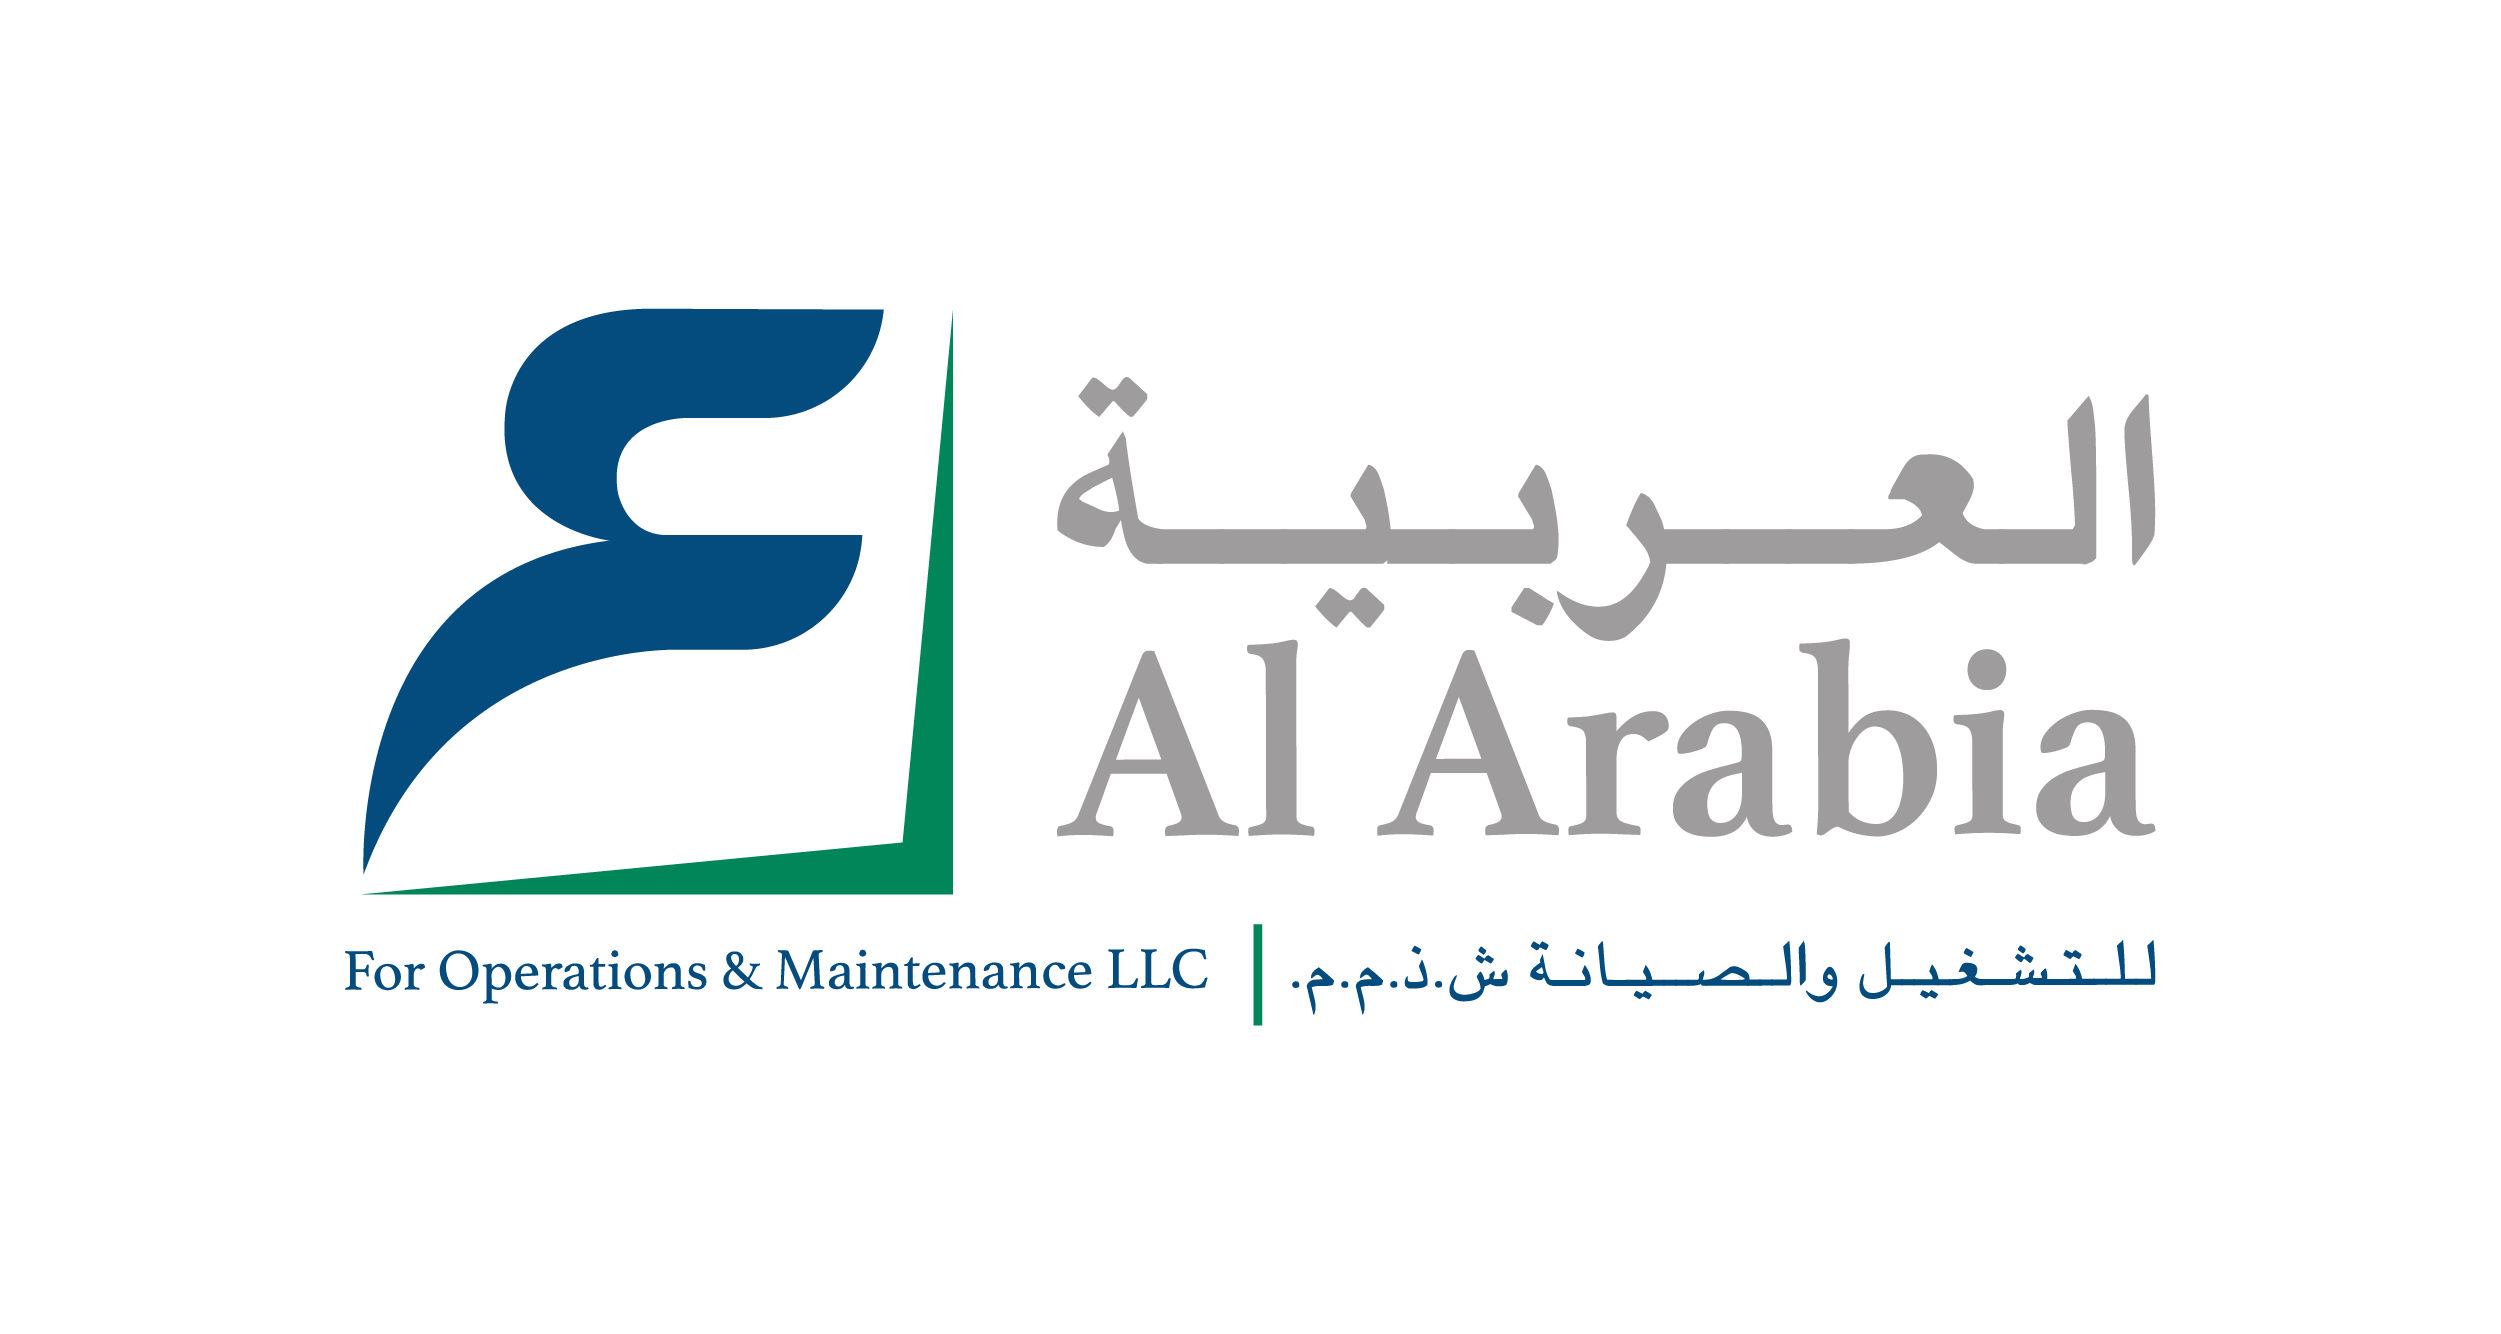 Al Arabia for Operations & Maintenance Logo